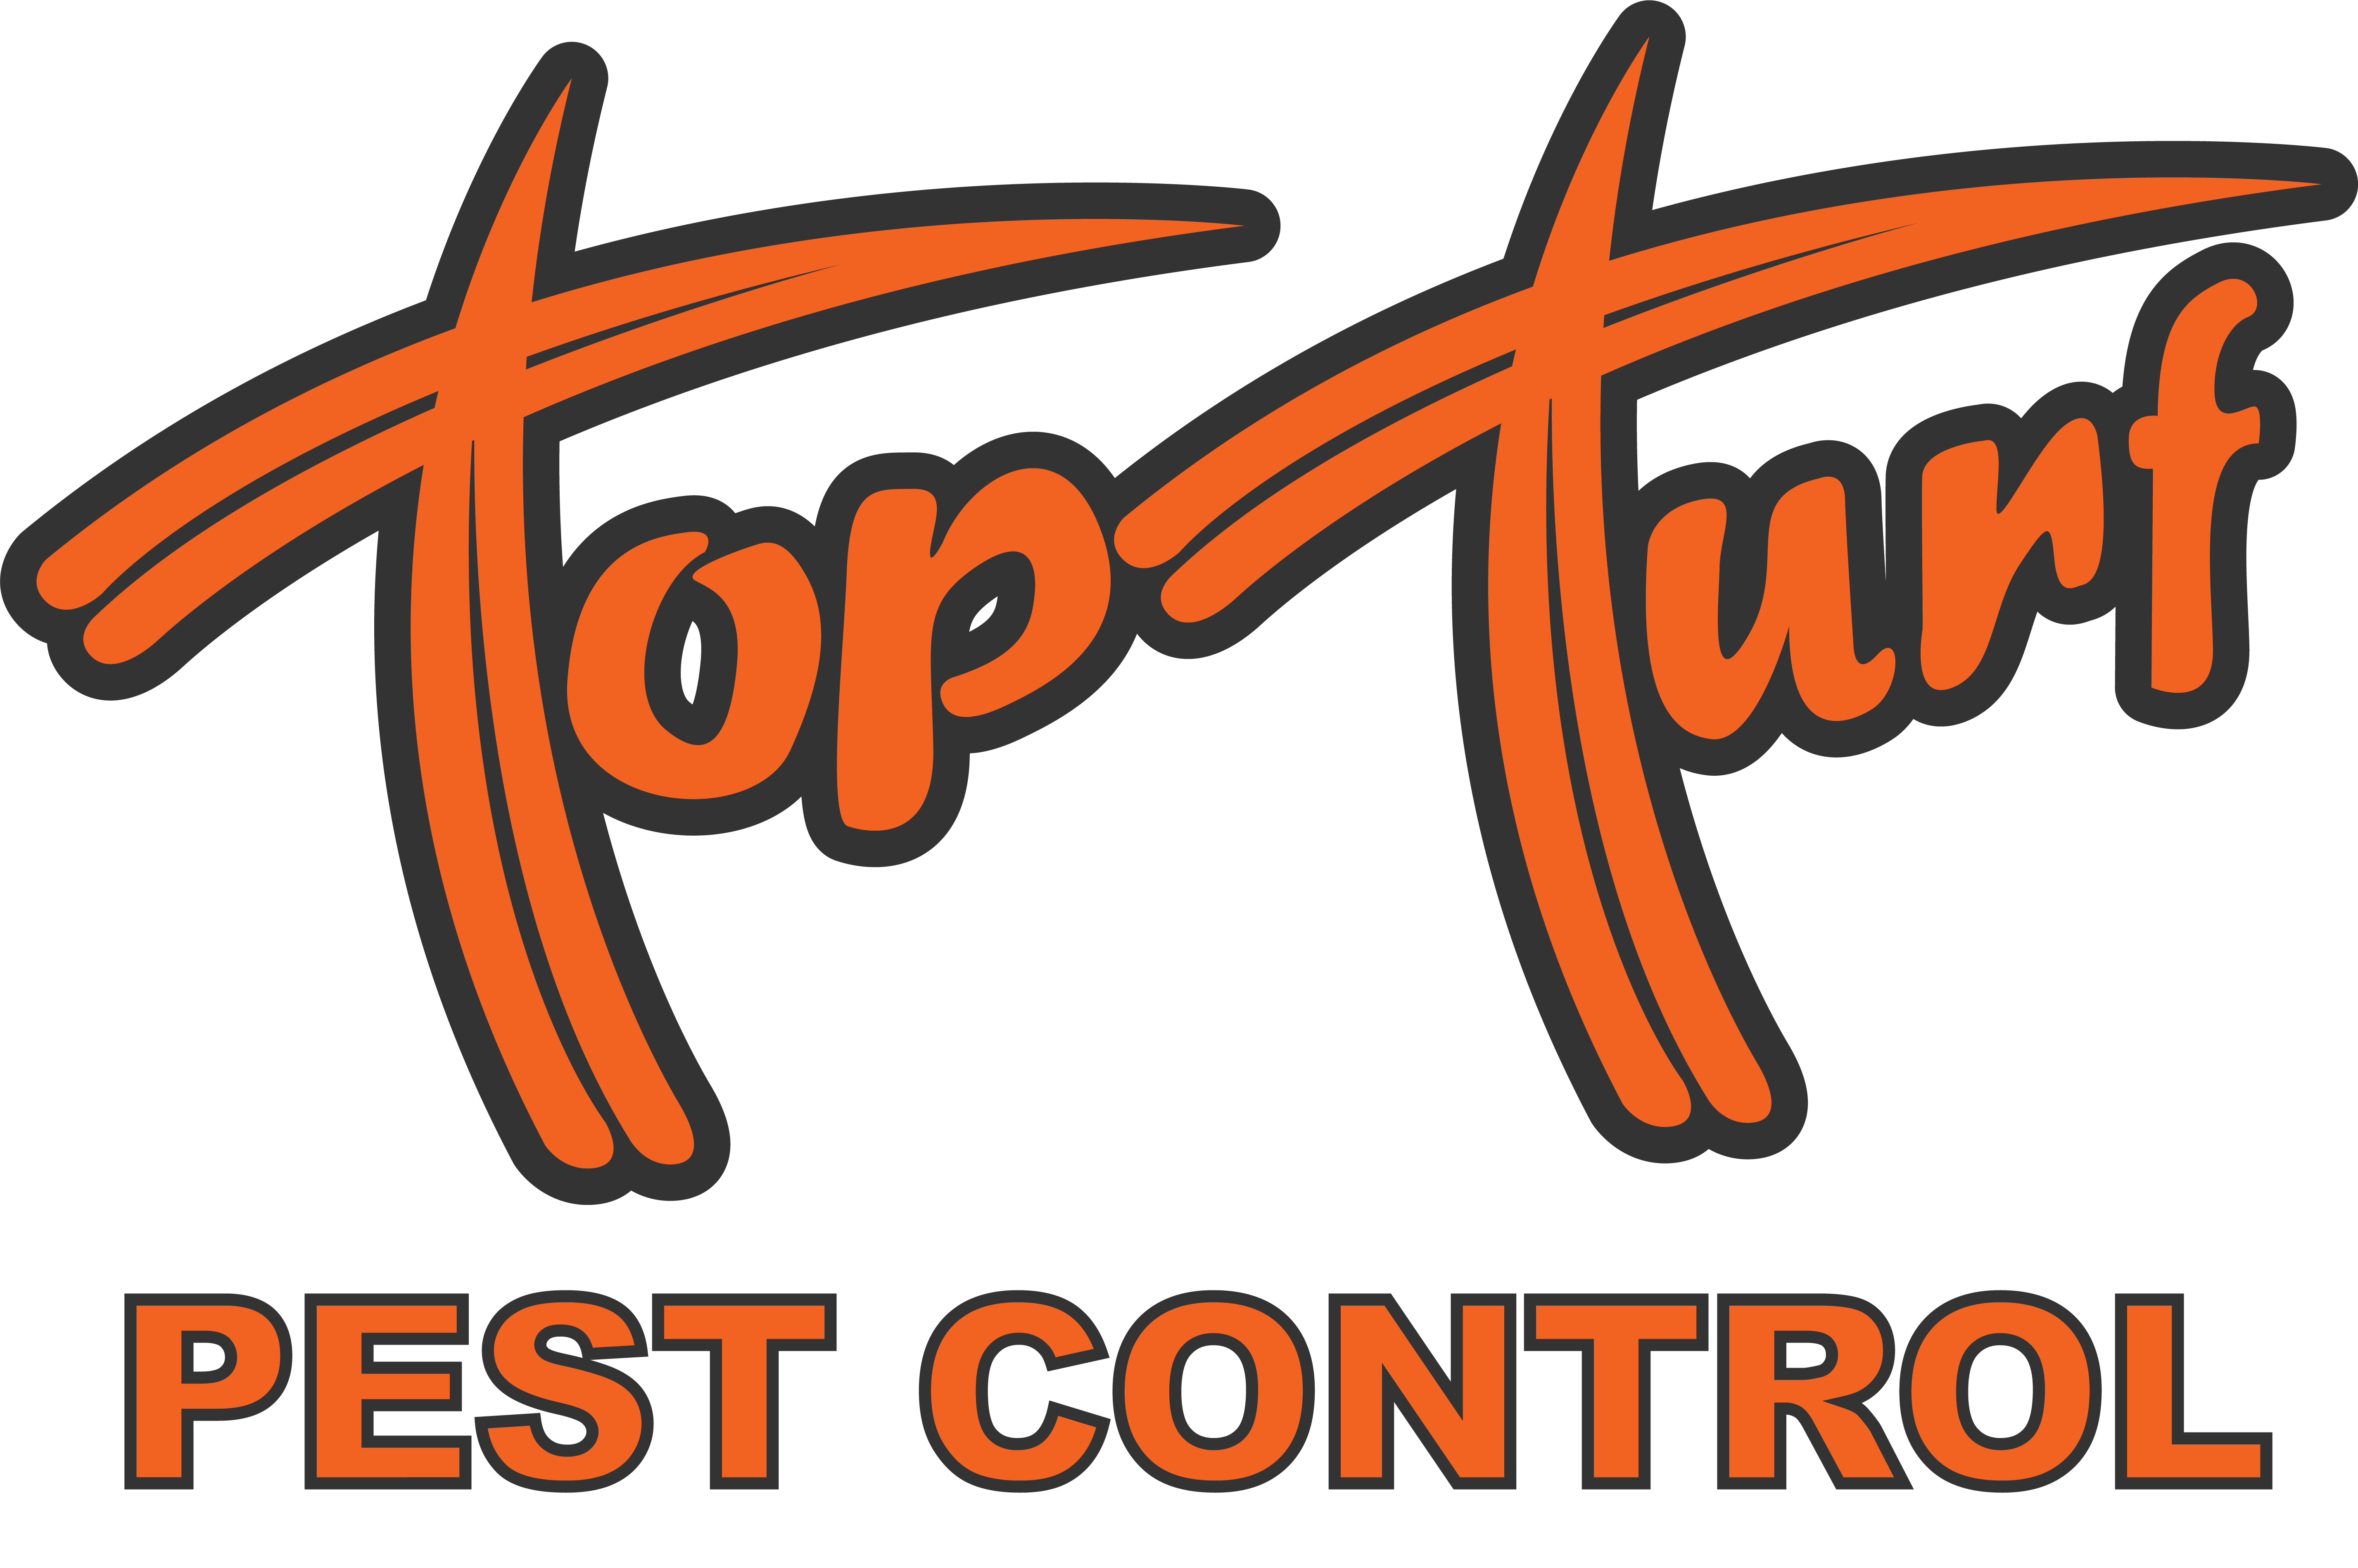 Top Turf logo with pest control wordmark white R